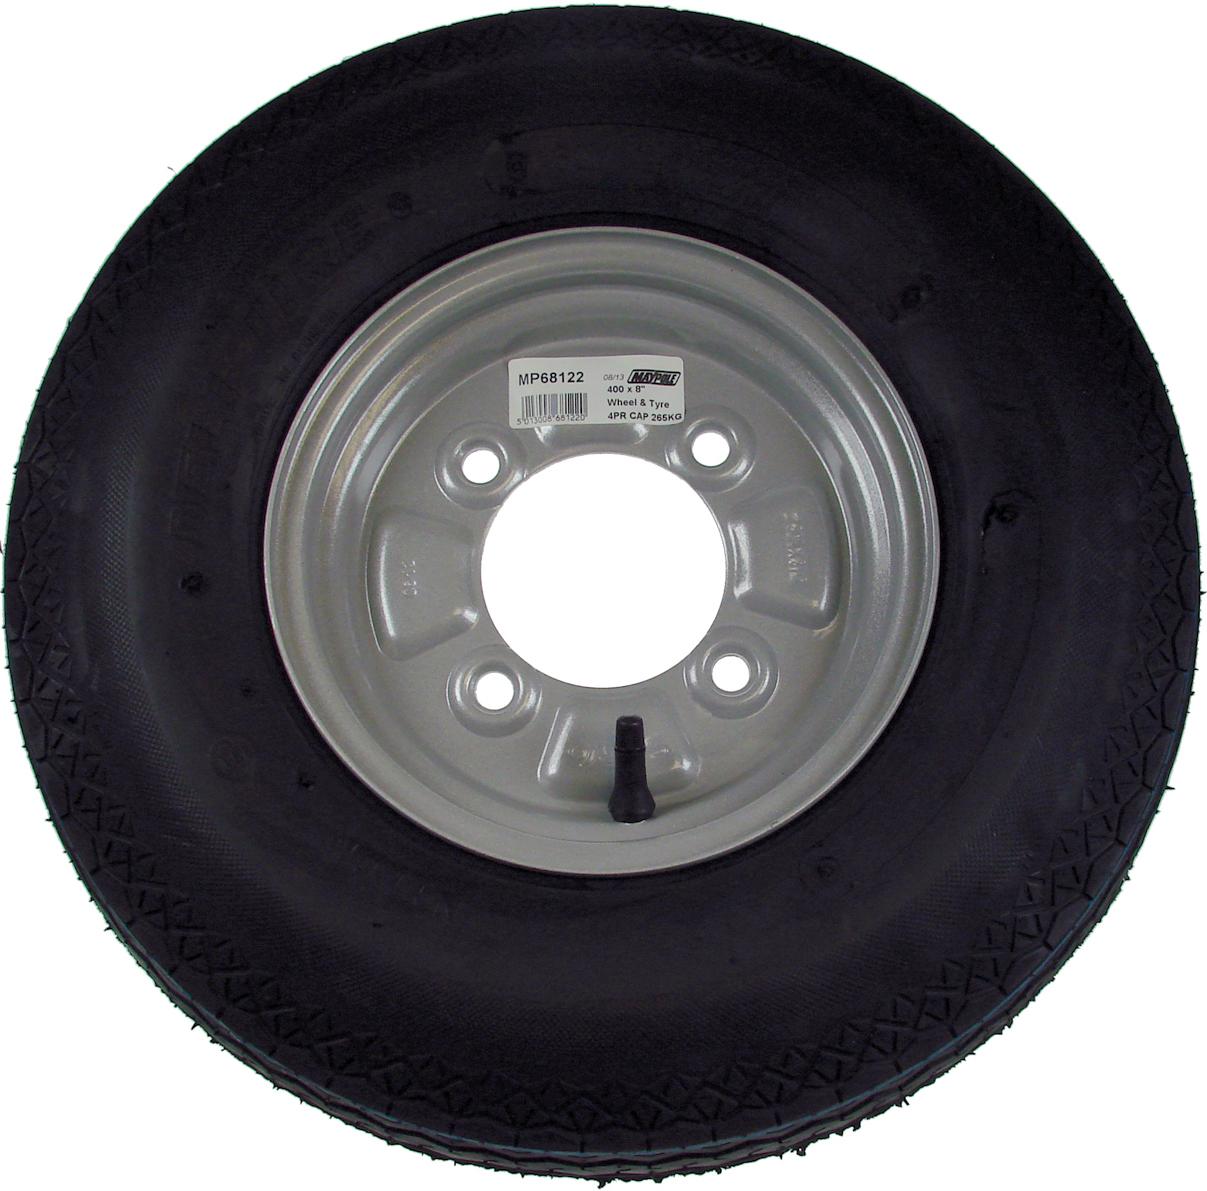 Maypole Spare Wheel For Car Trailer Mp6812 - Medium